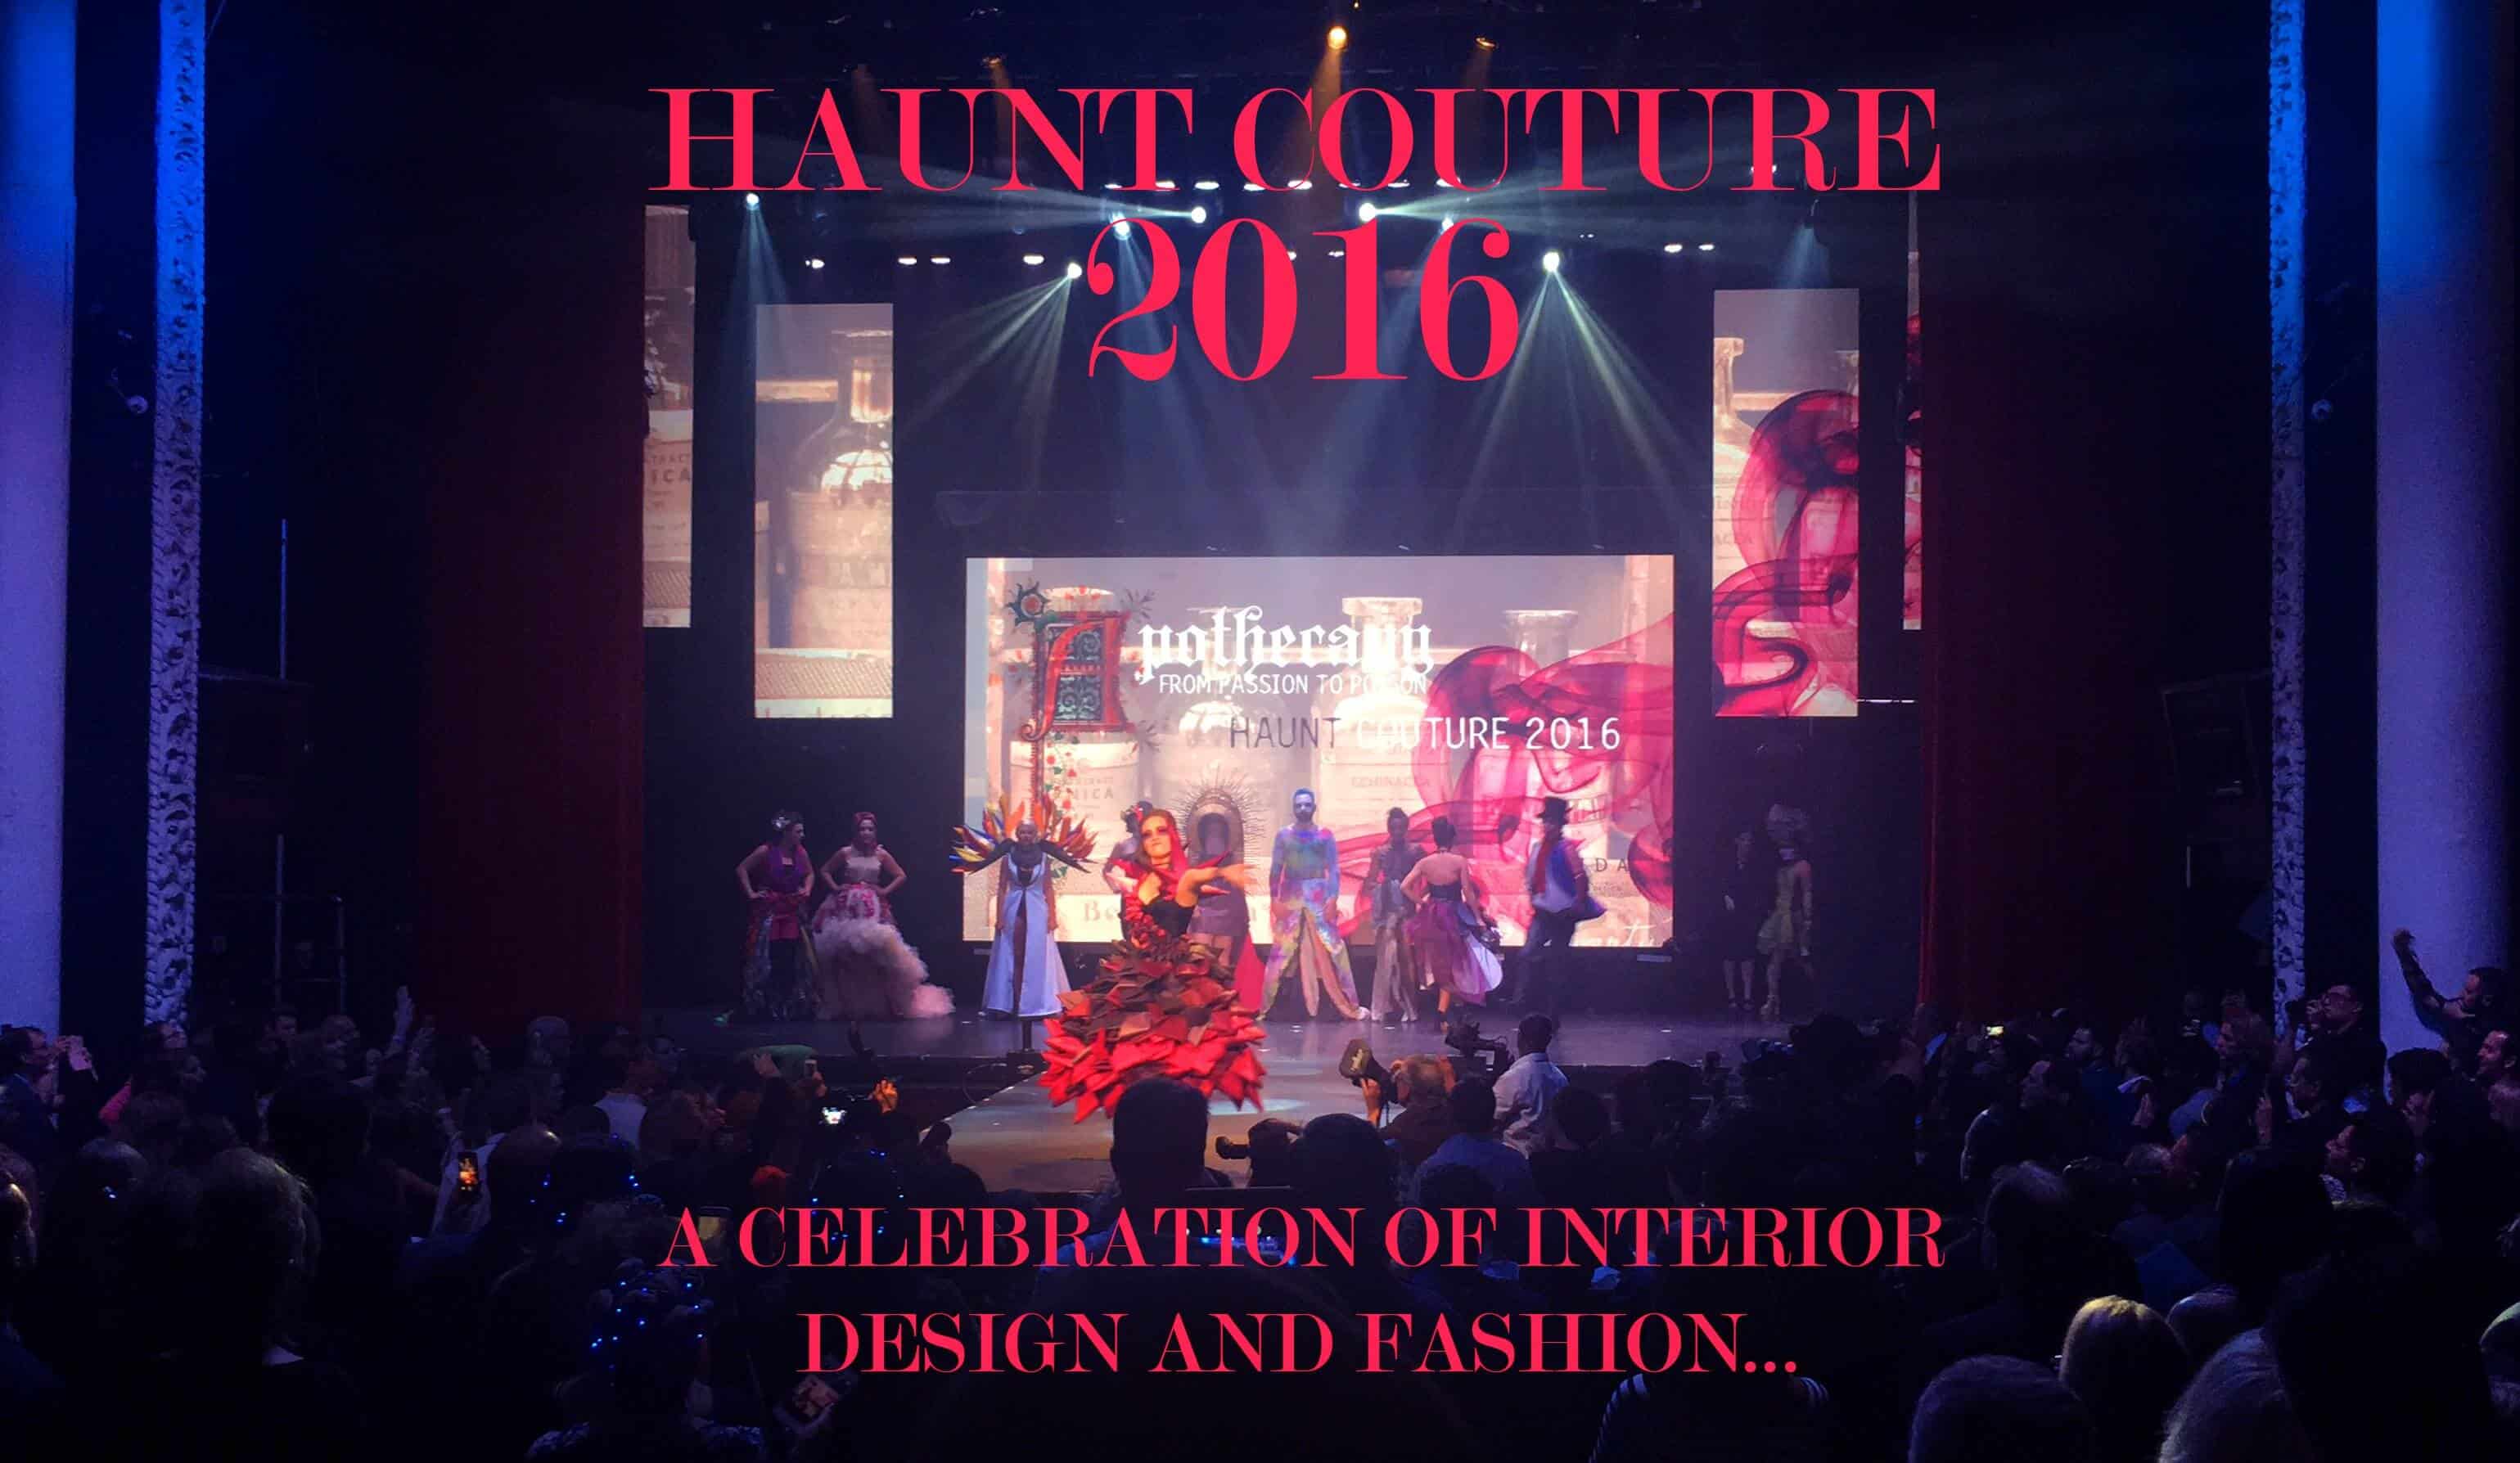 Haunt Couture 2016. A celebration of interior design and fashion